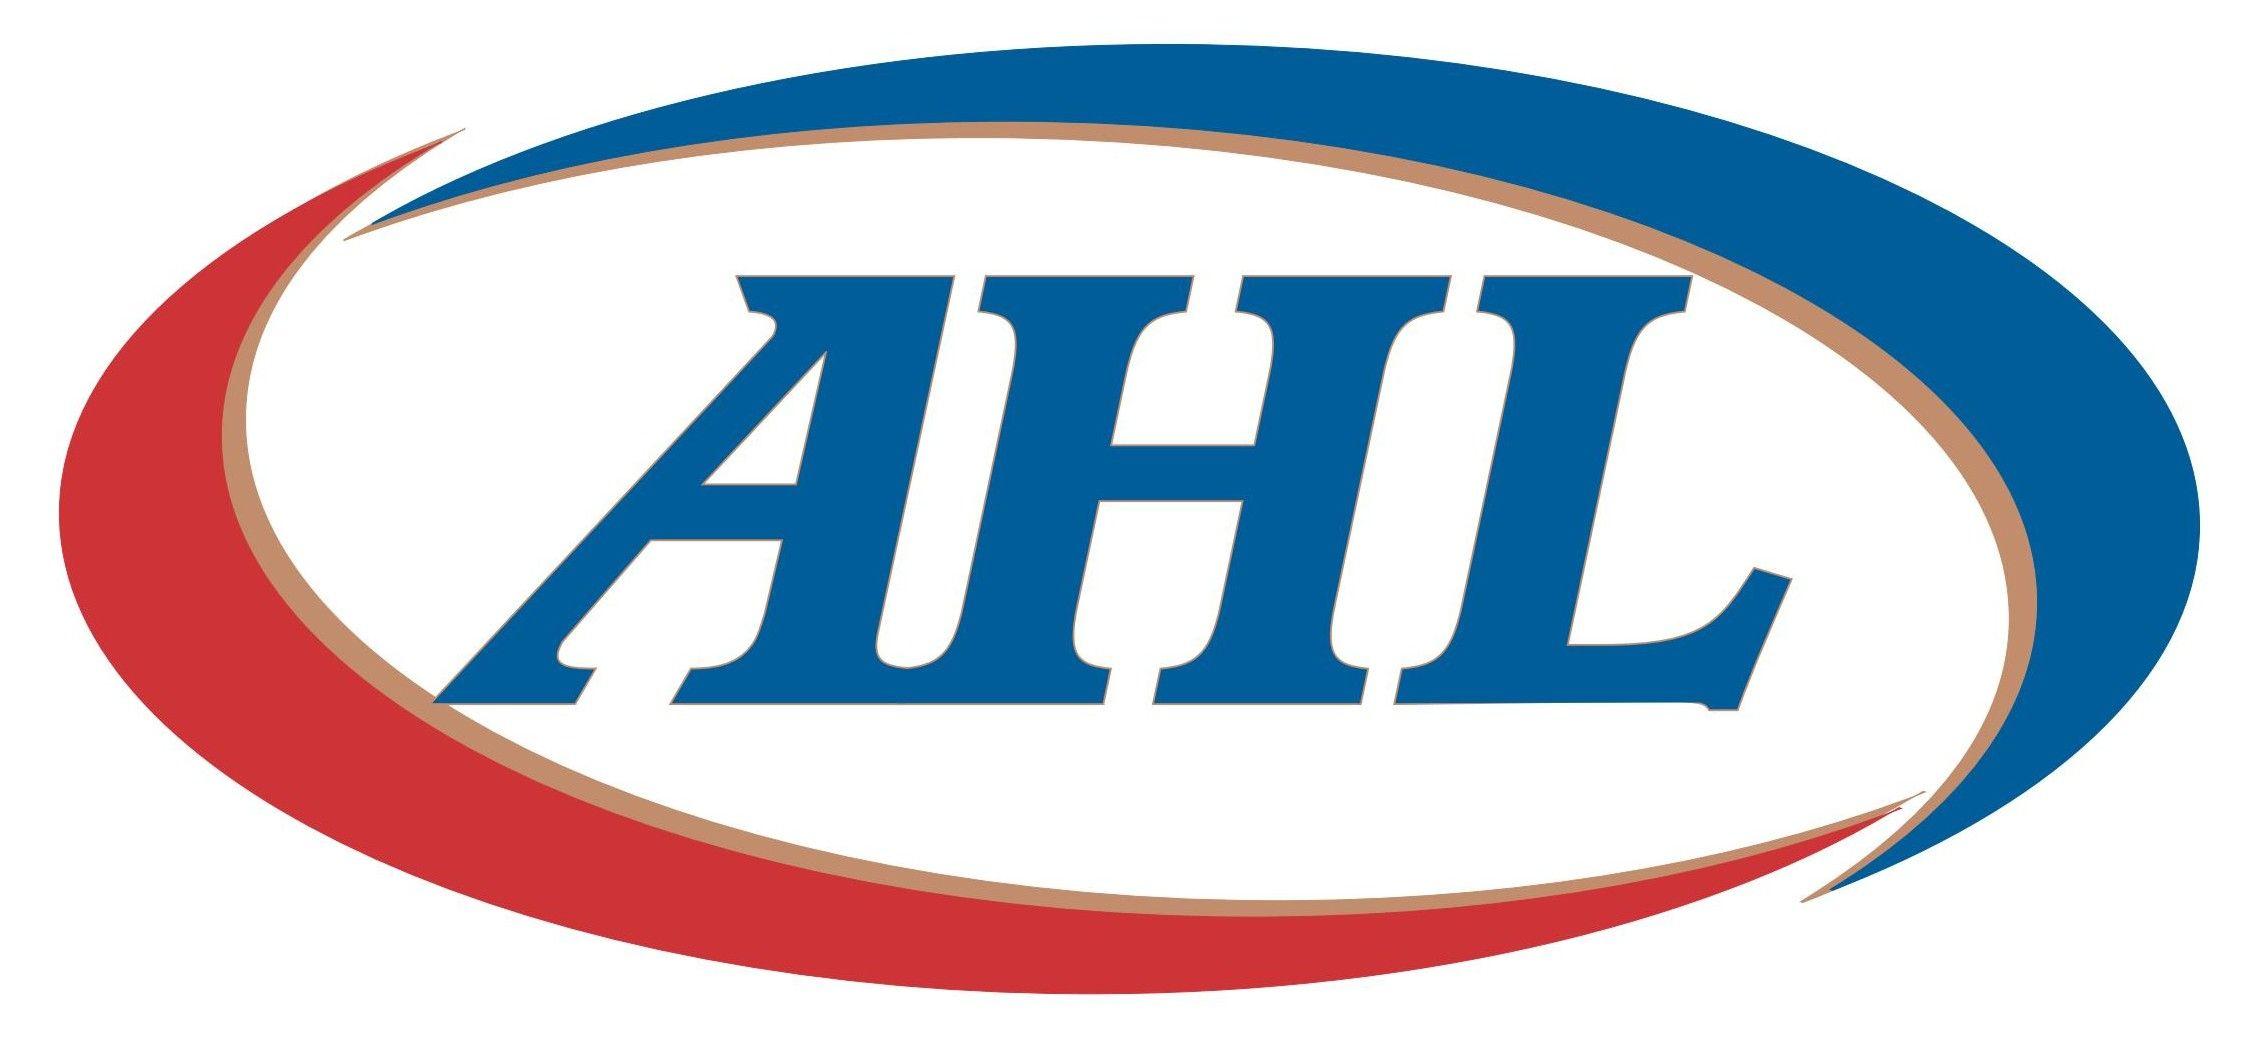 AHL Logo - AHL Logo [American Hockey League] Free Vector Download